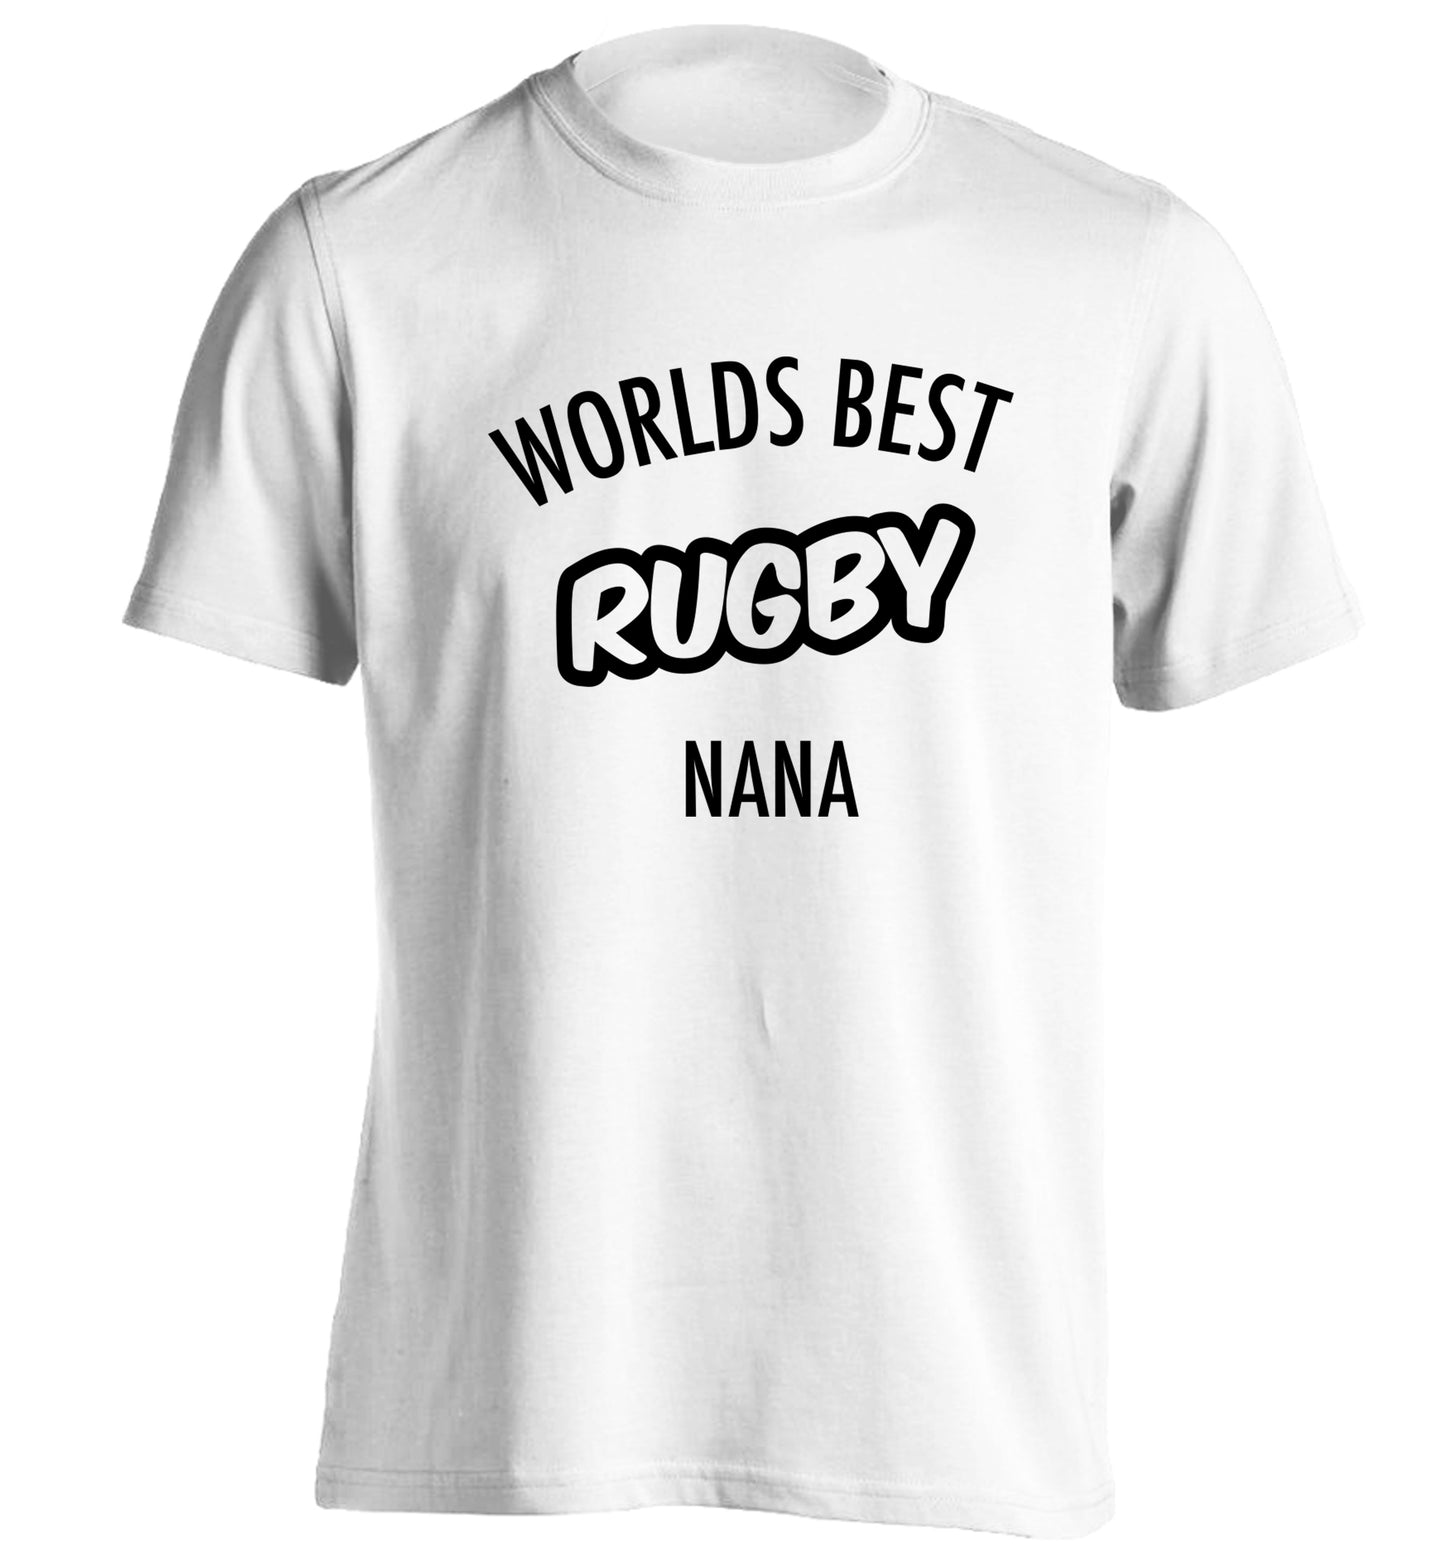 Worlds Best Rugby Grandma adults unisex white Tshirt 2XL